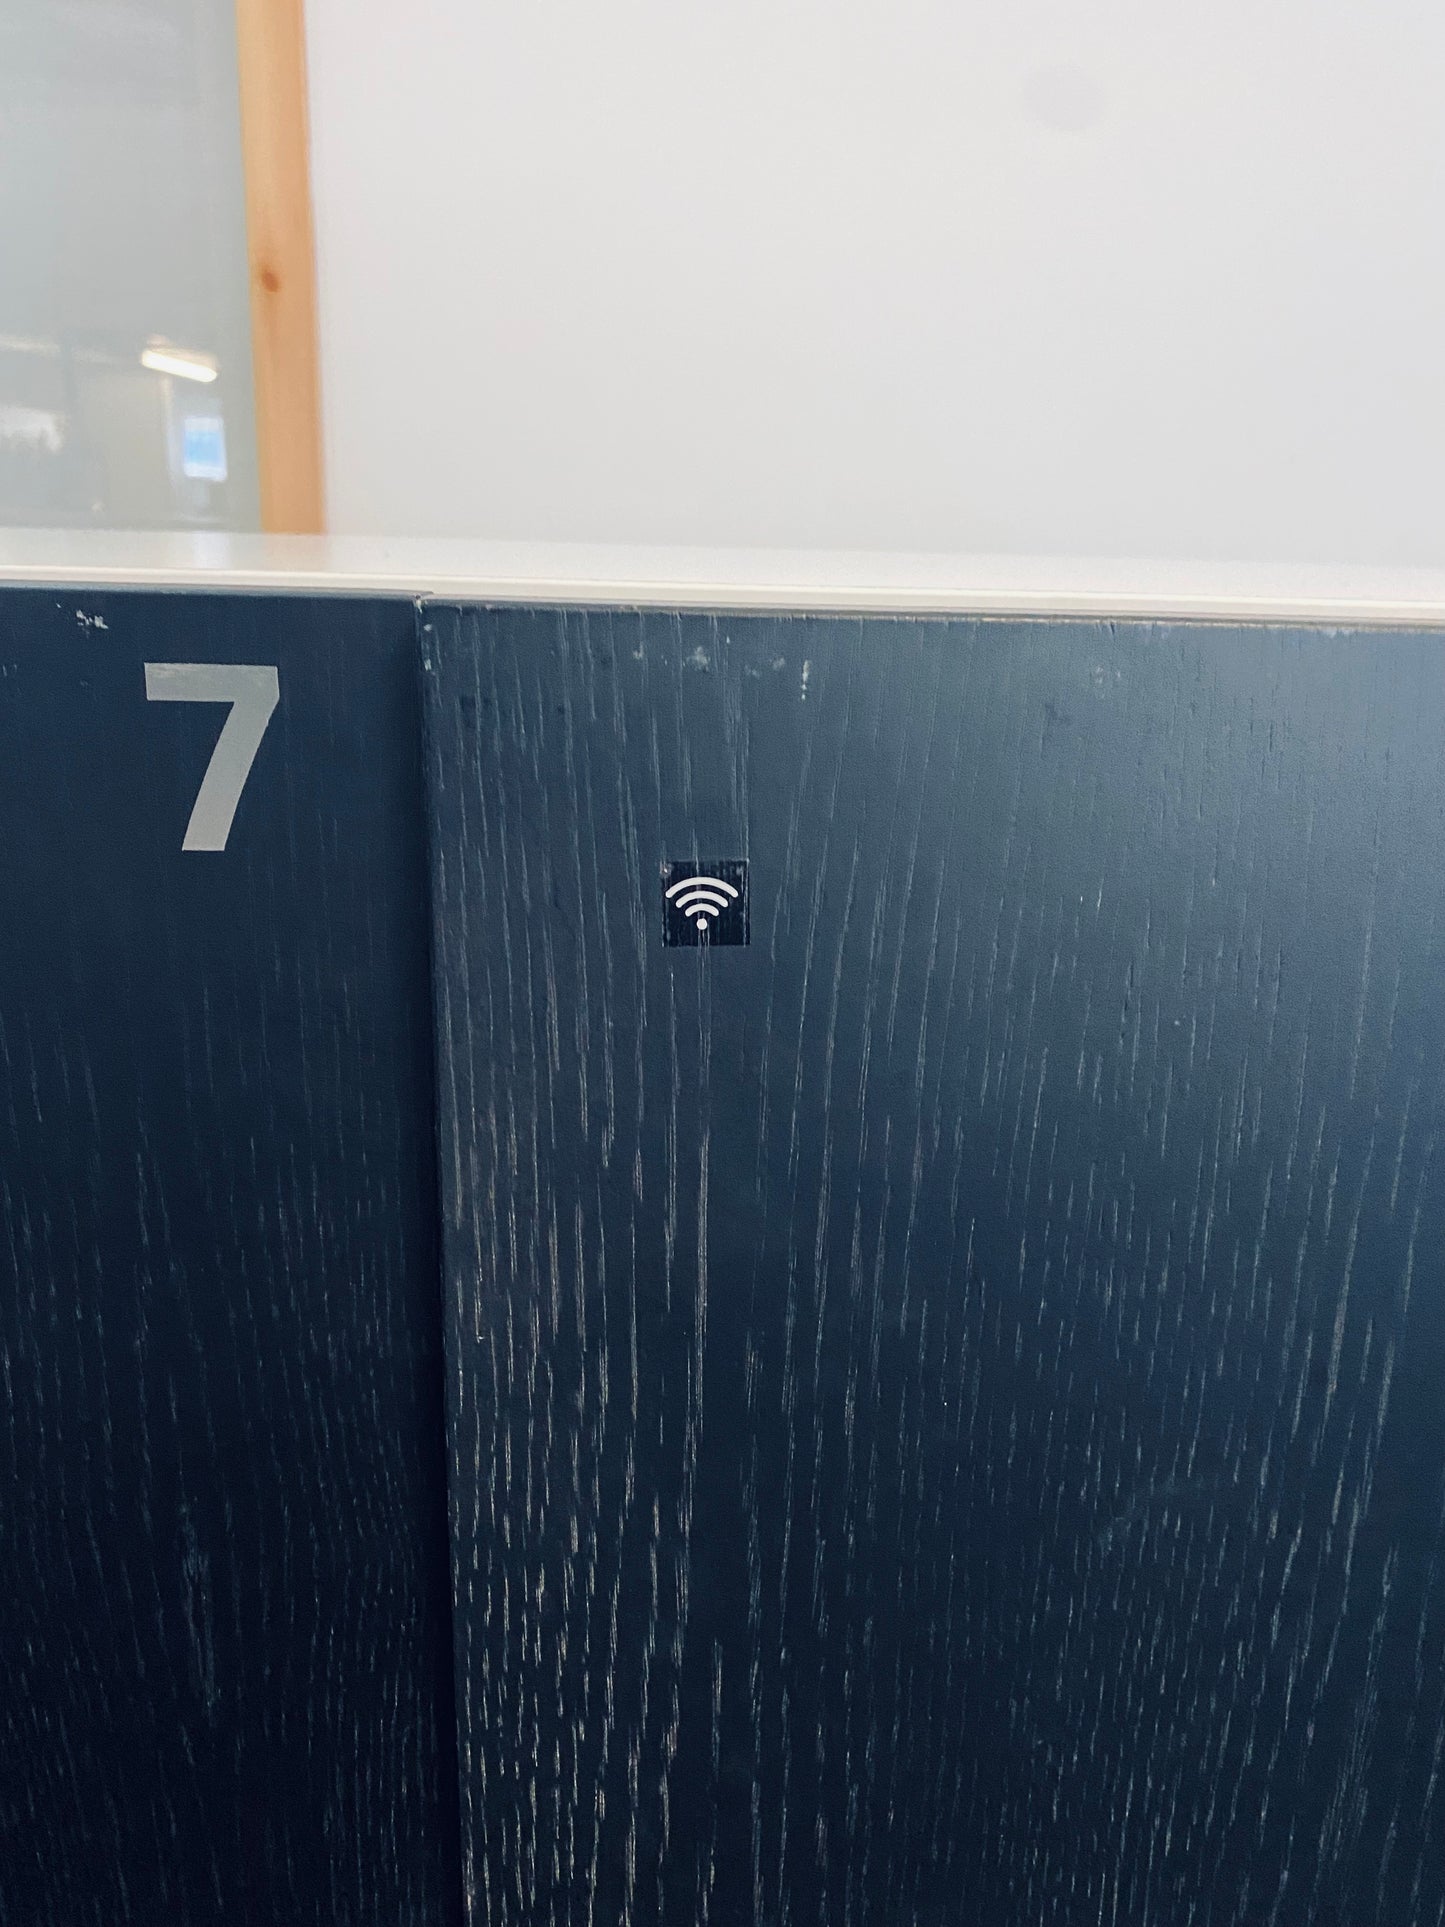 Wifi sign on black locker